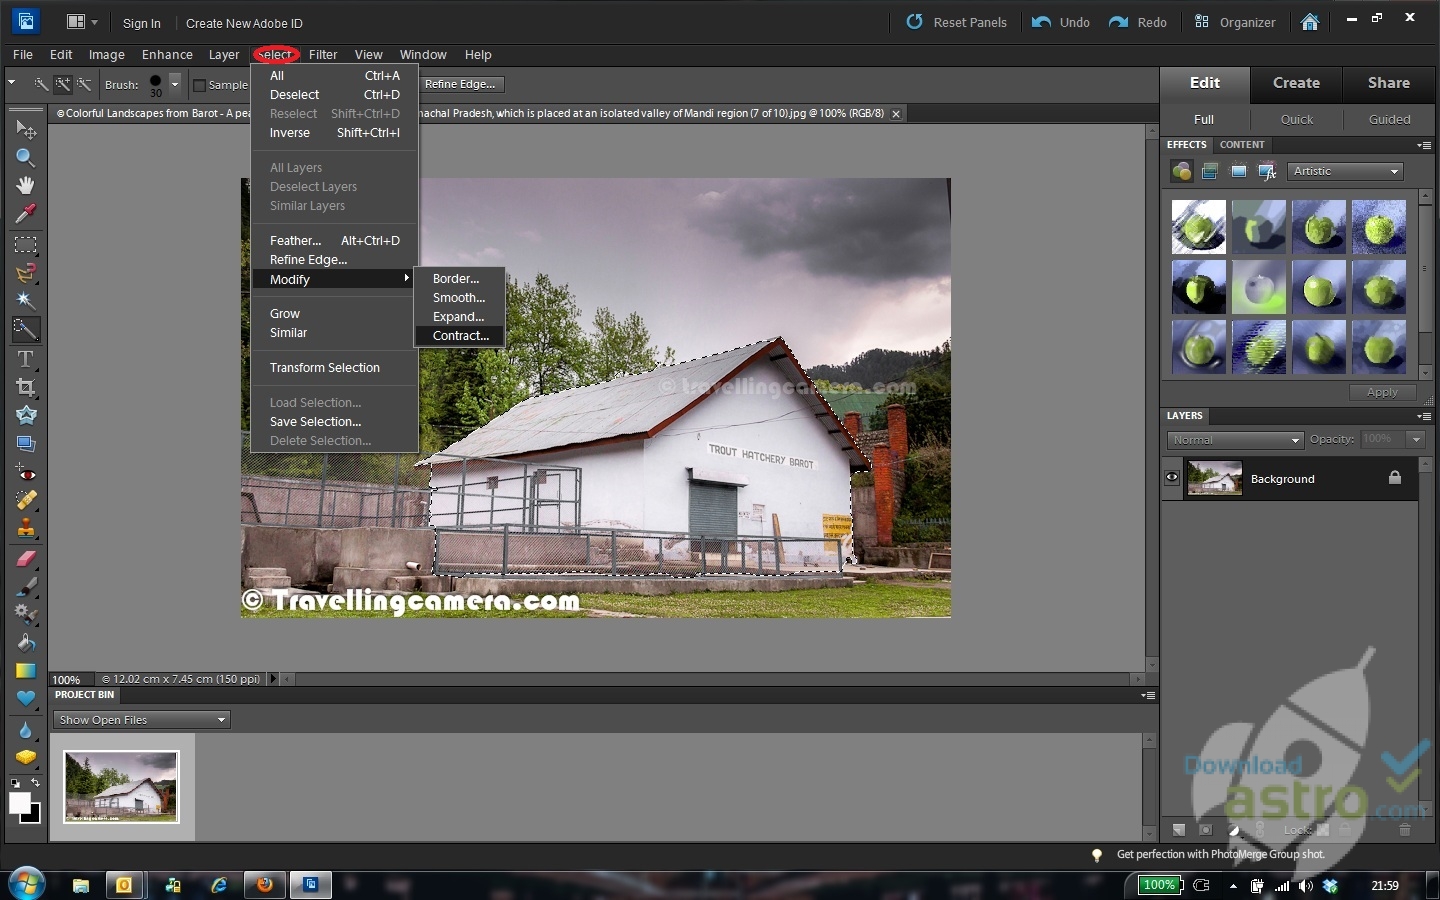 Adobe photoshop elements 11 mac download